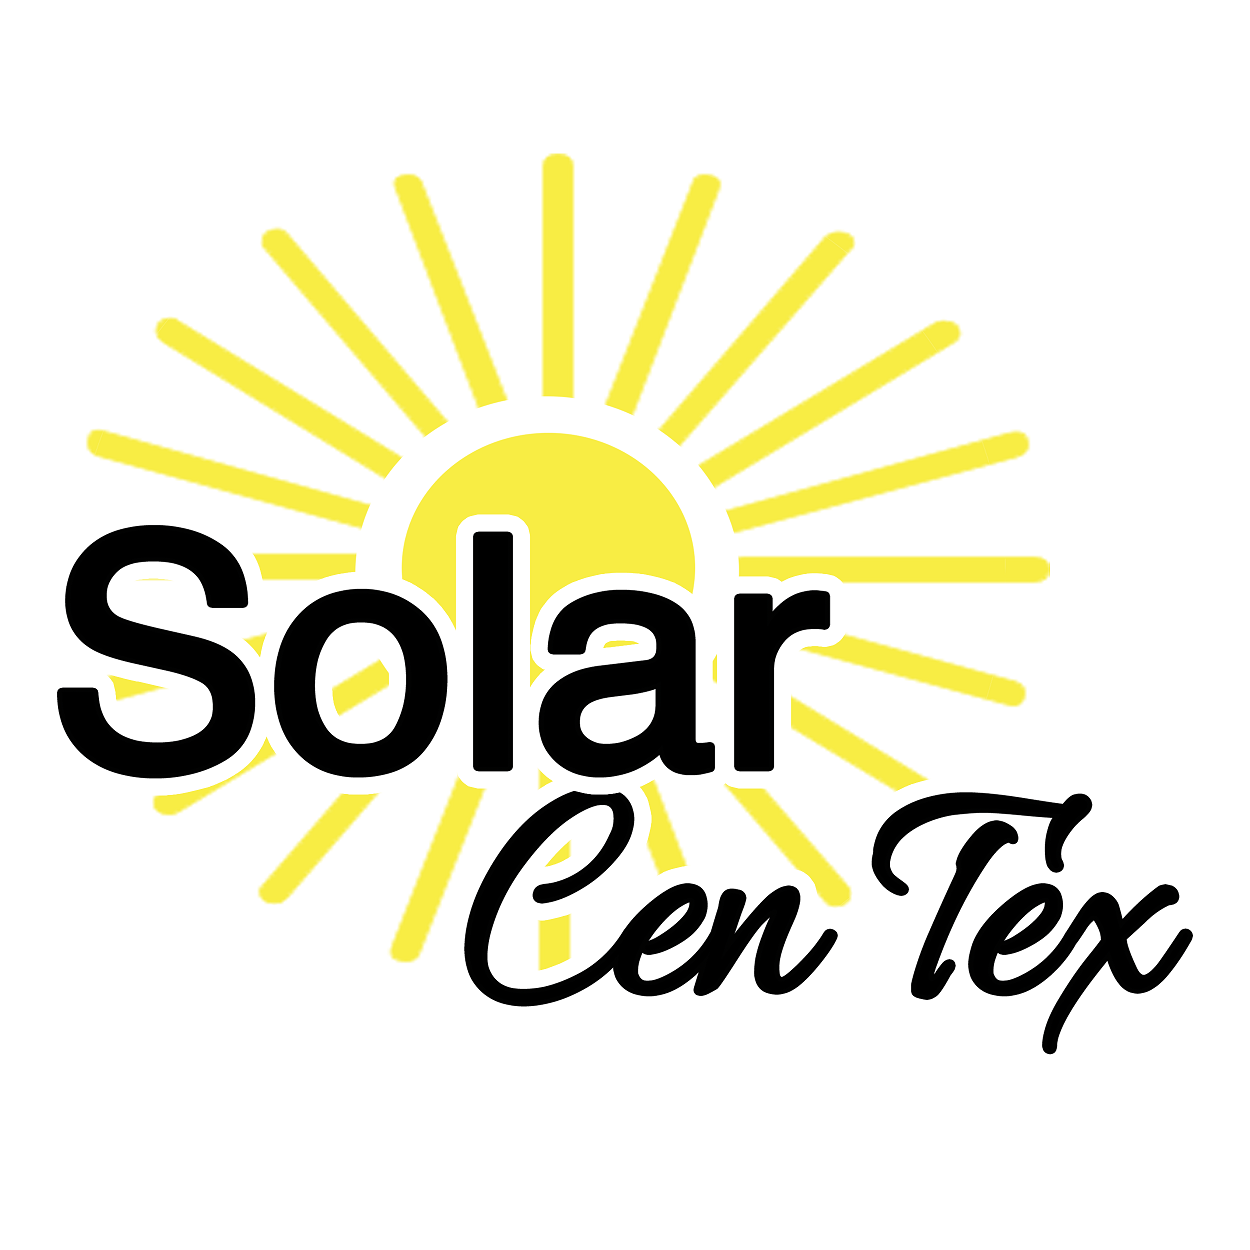 Solar Centex logo